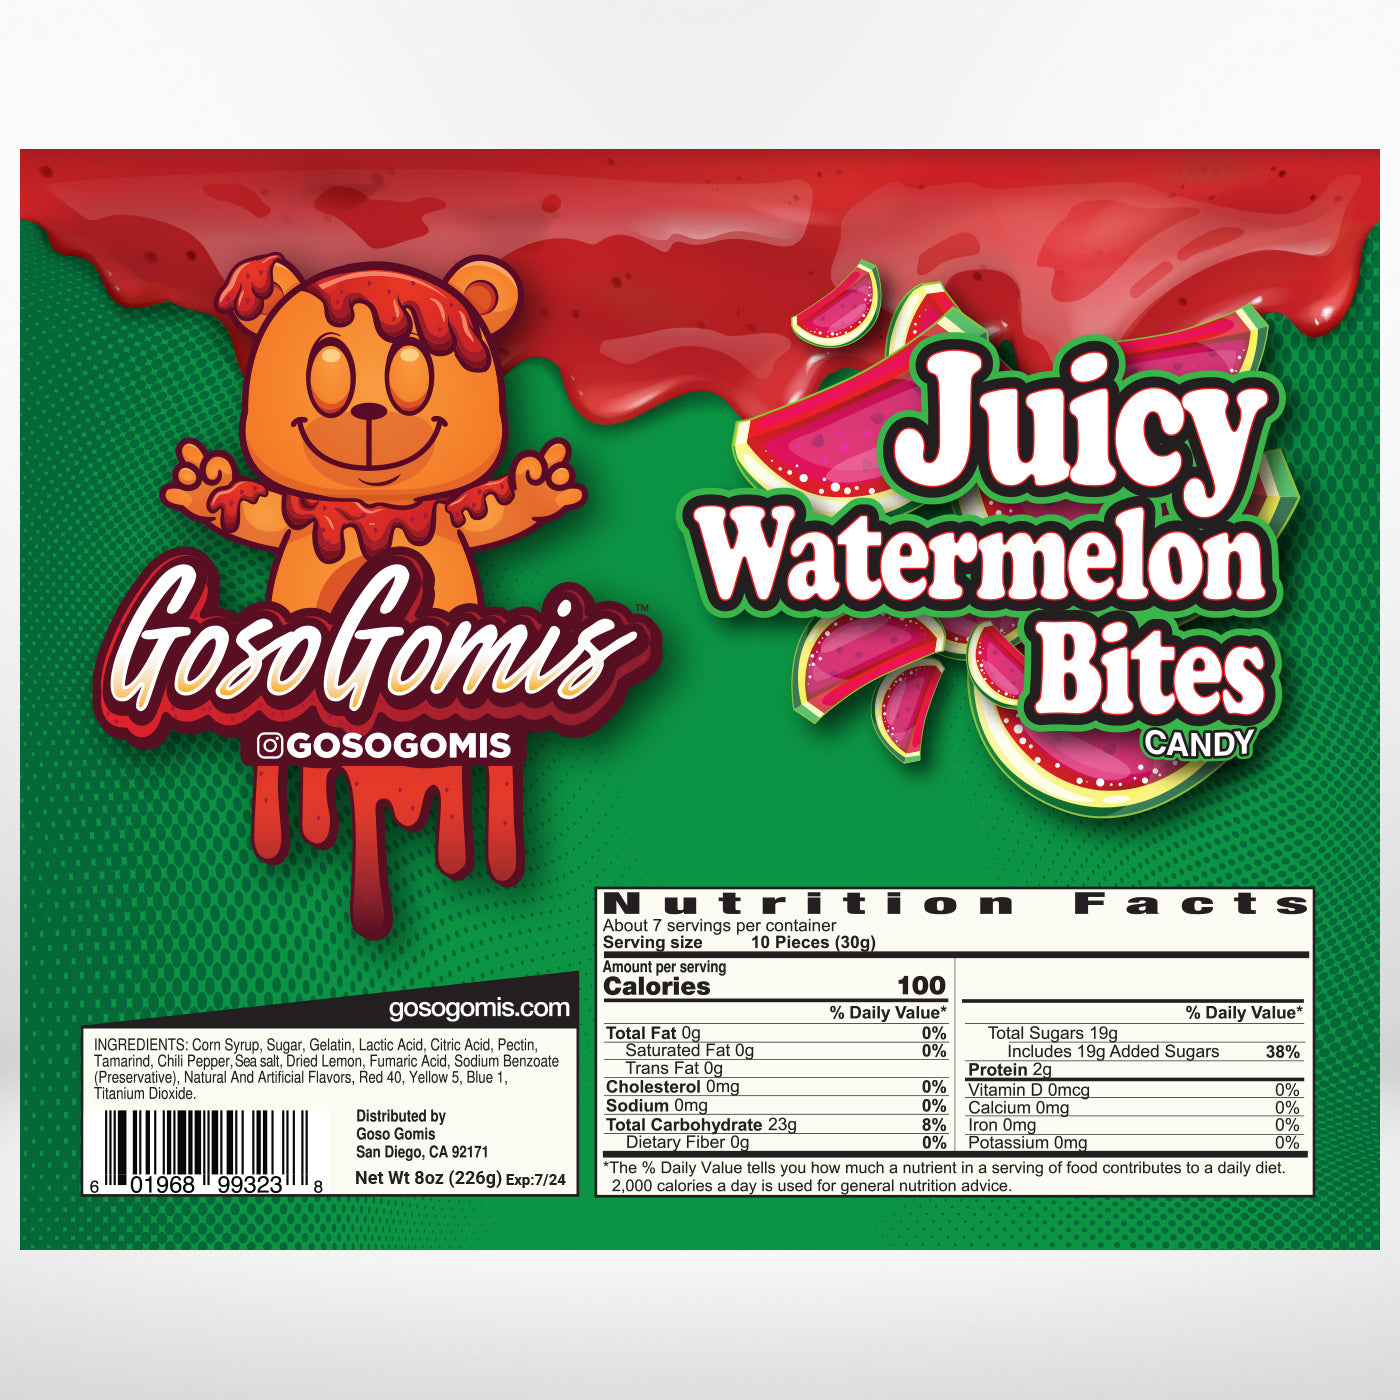 Juicy Watermelon Bites